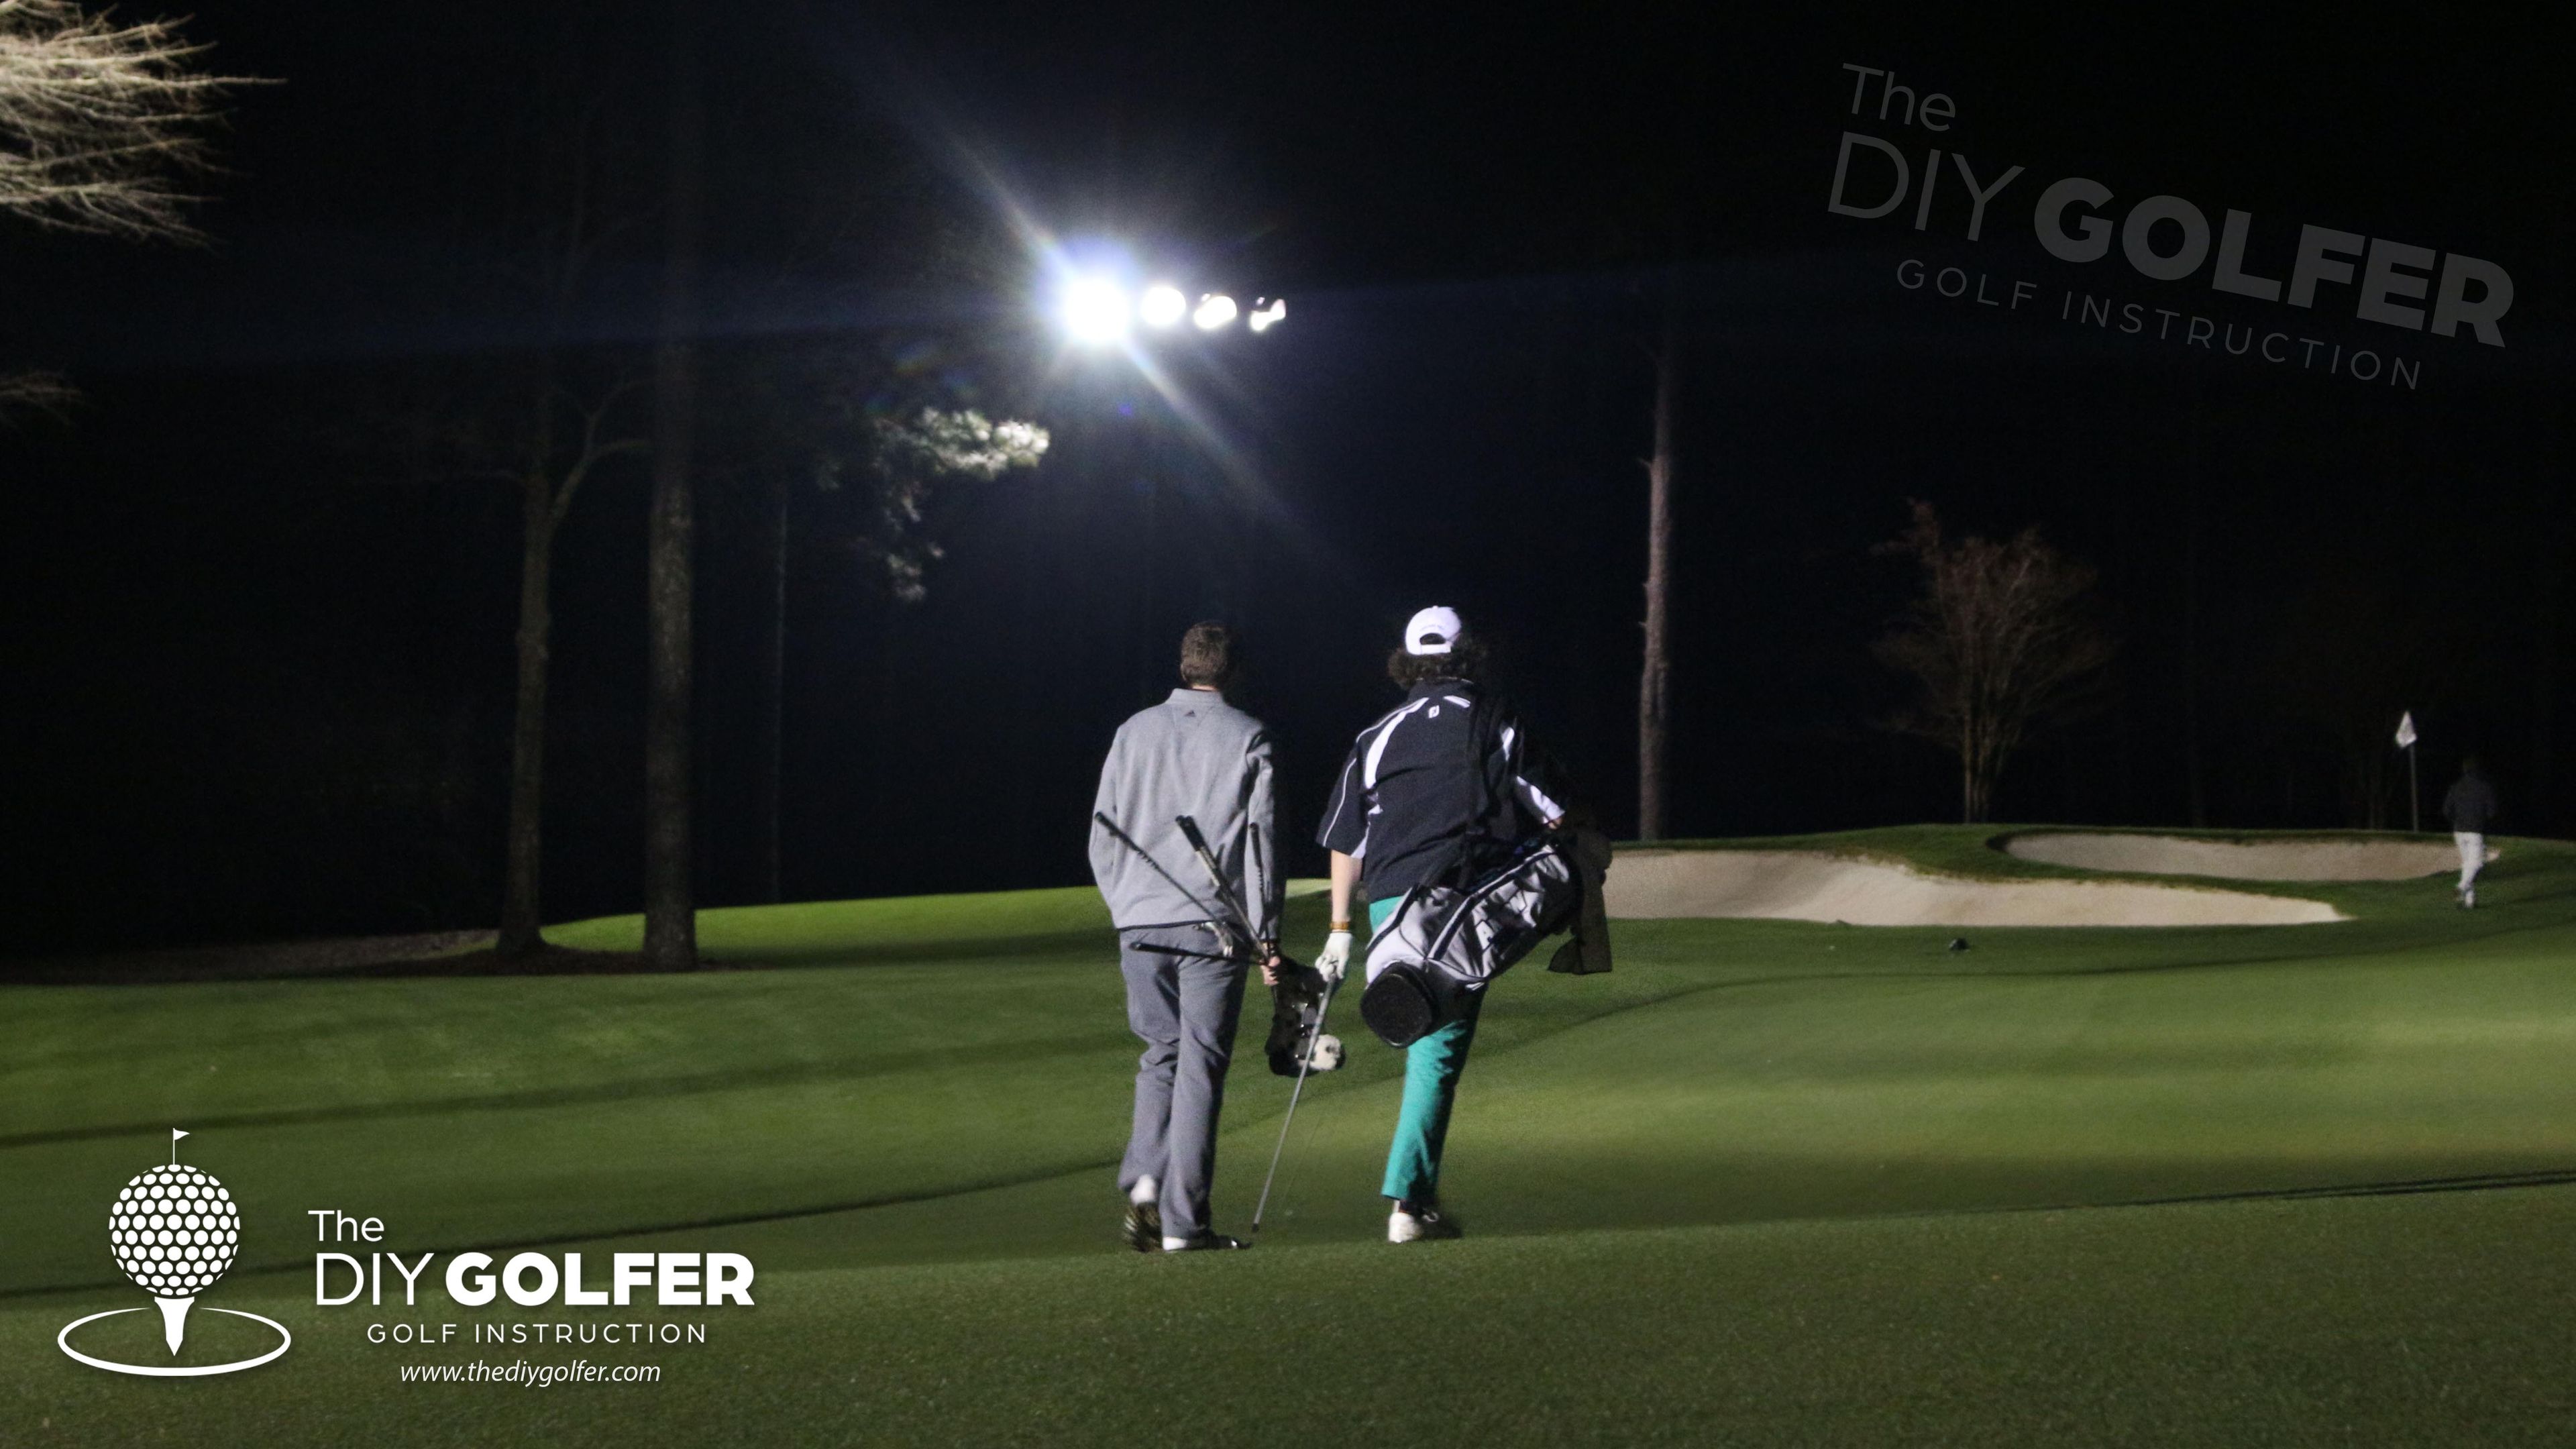 Night Golf Photo: Players Walking Down Fairway